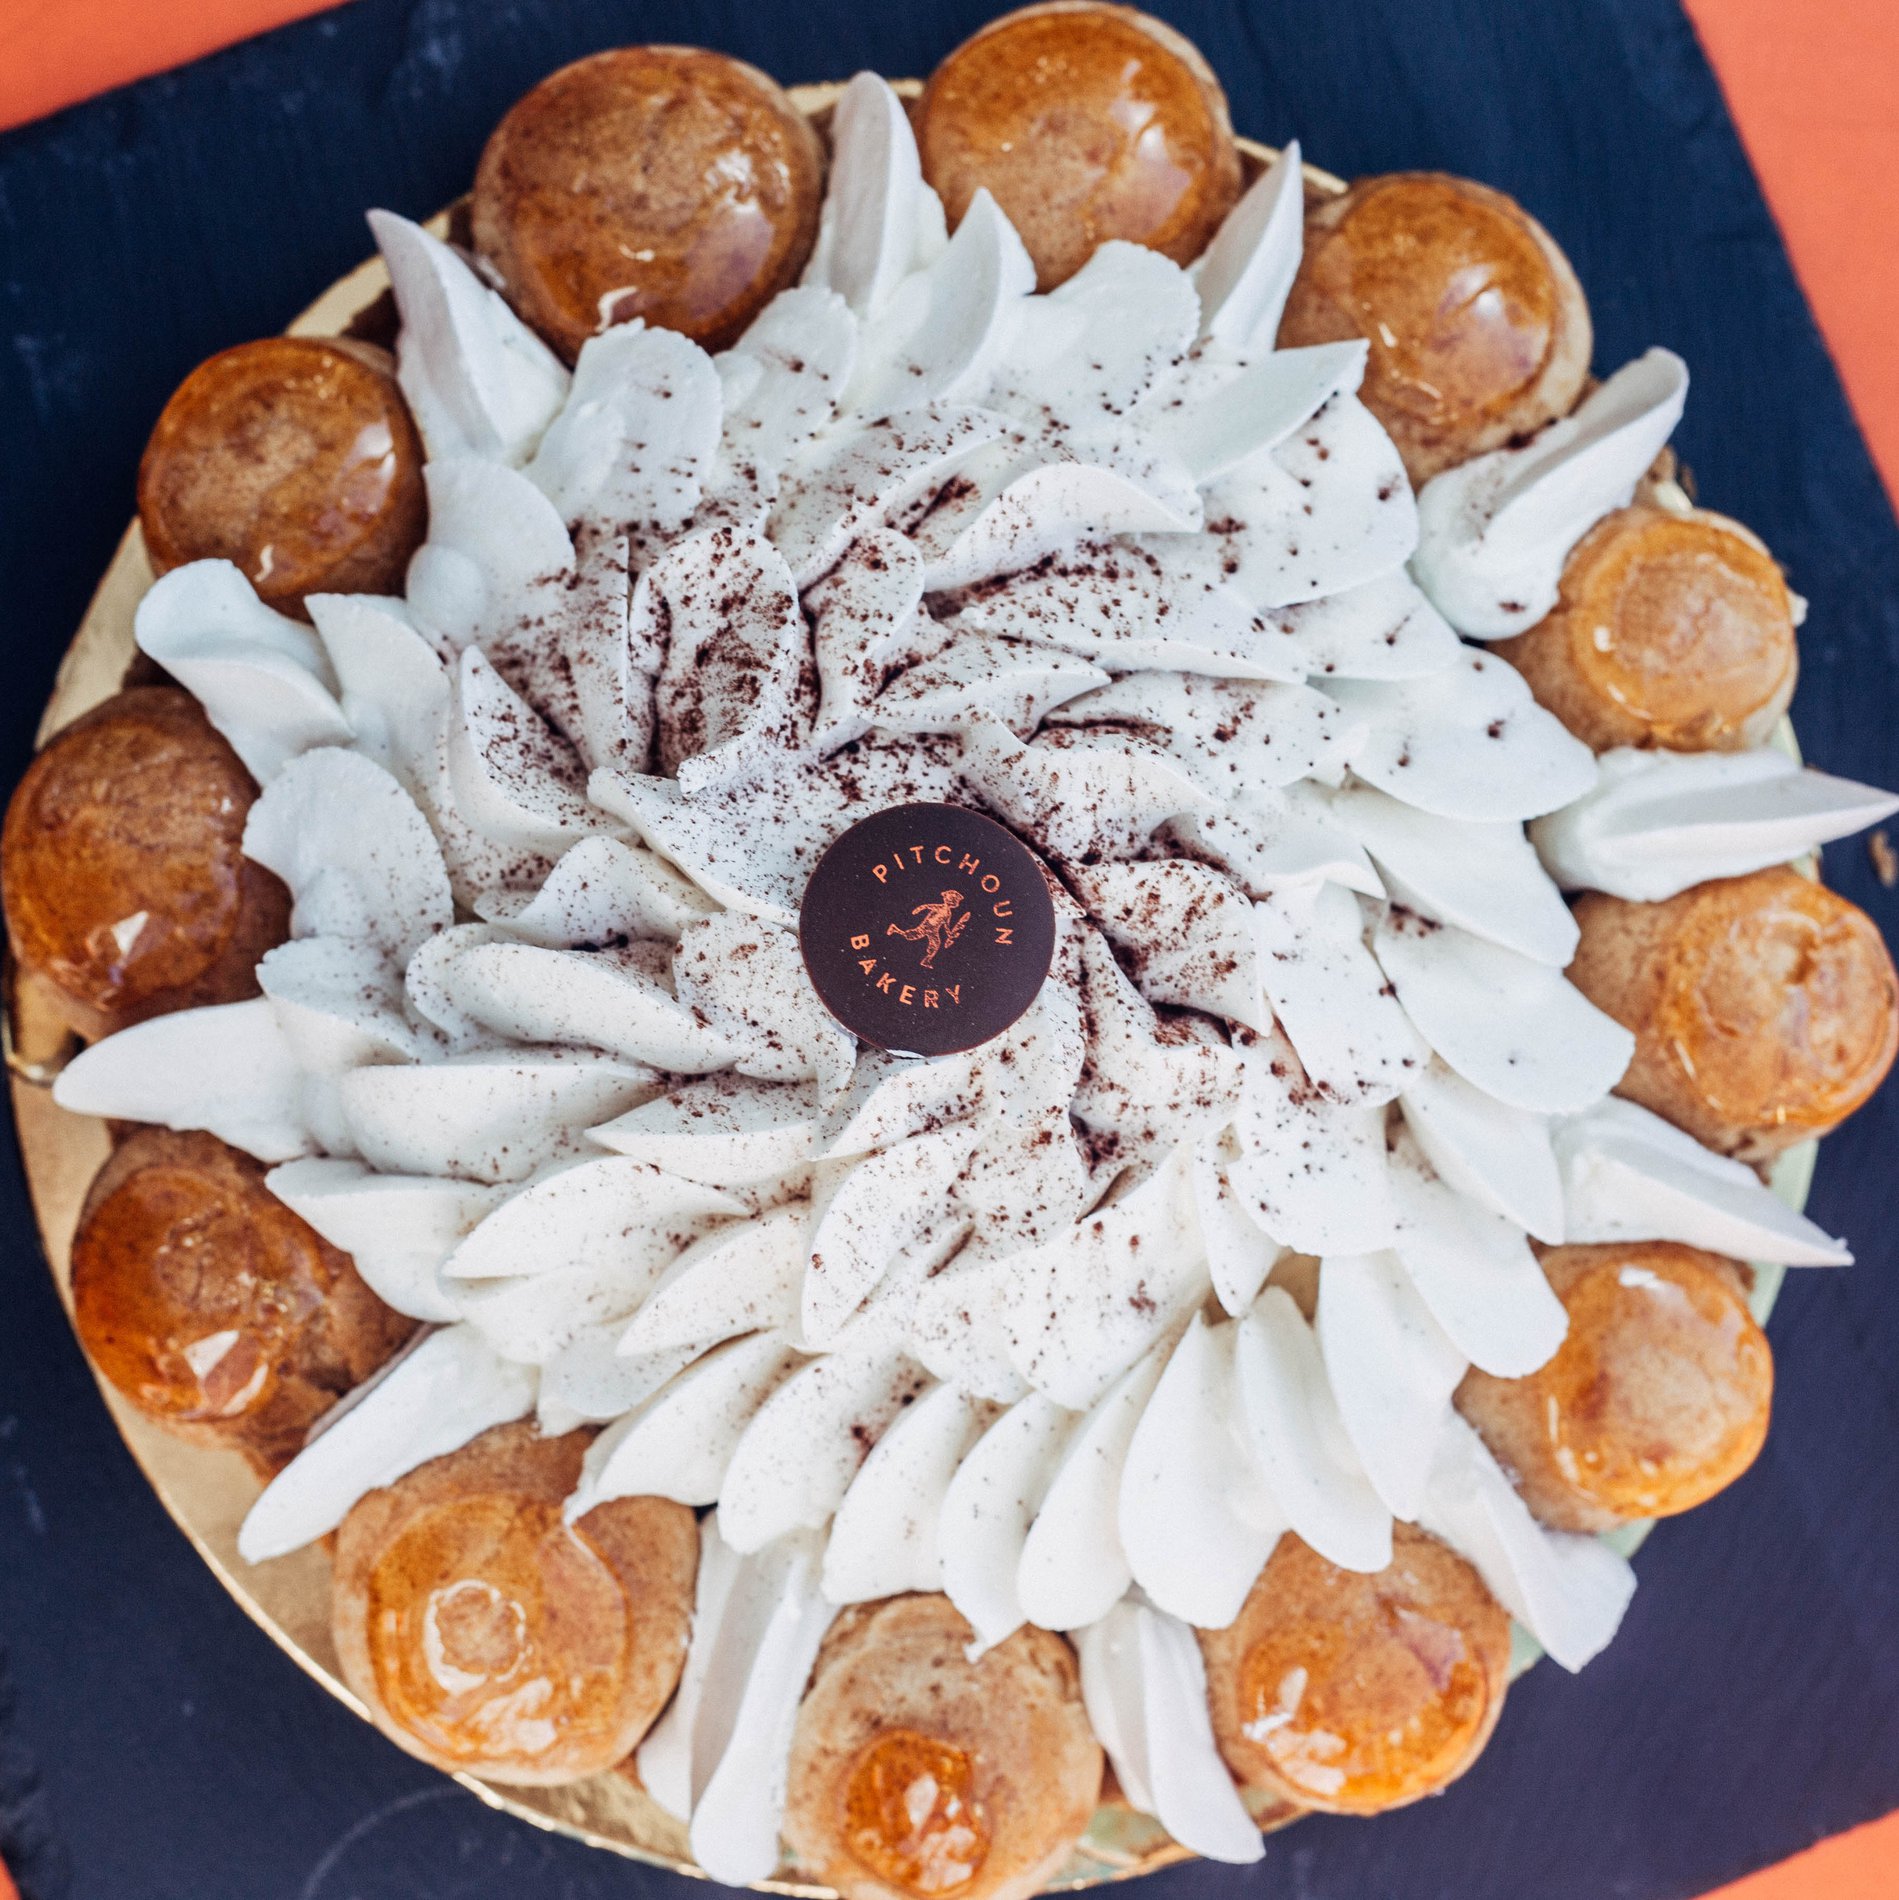 Pitchoun Bakery | Large Cakes | Saint-Honore